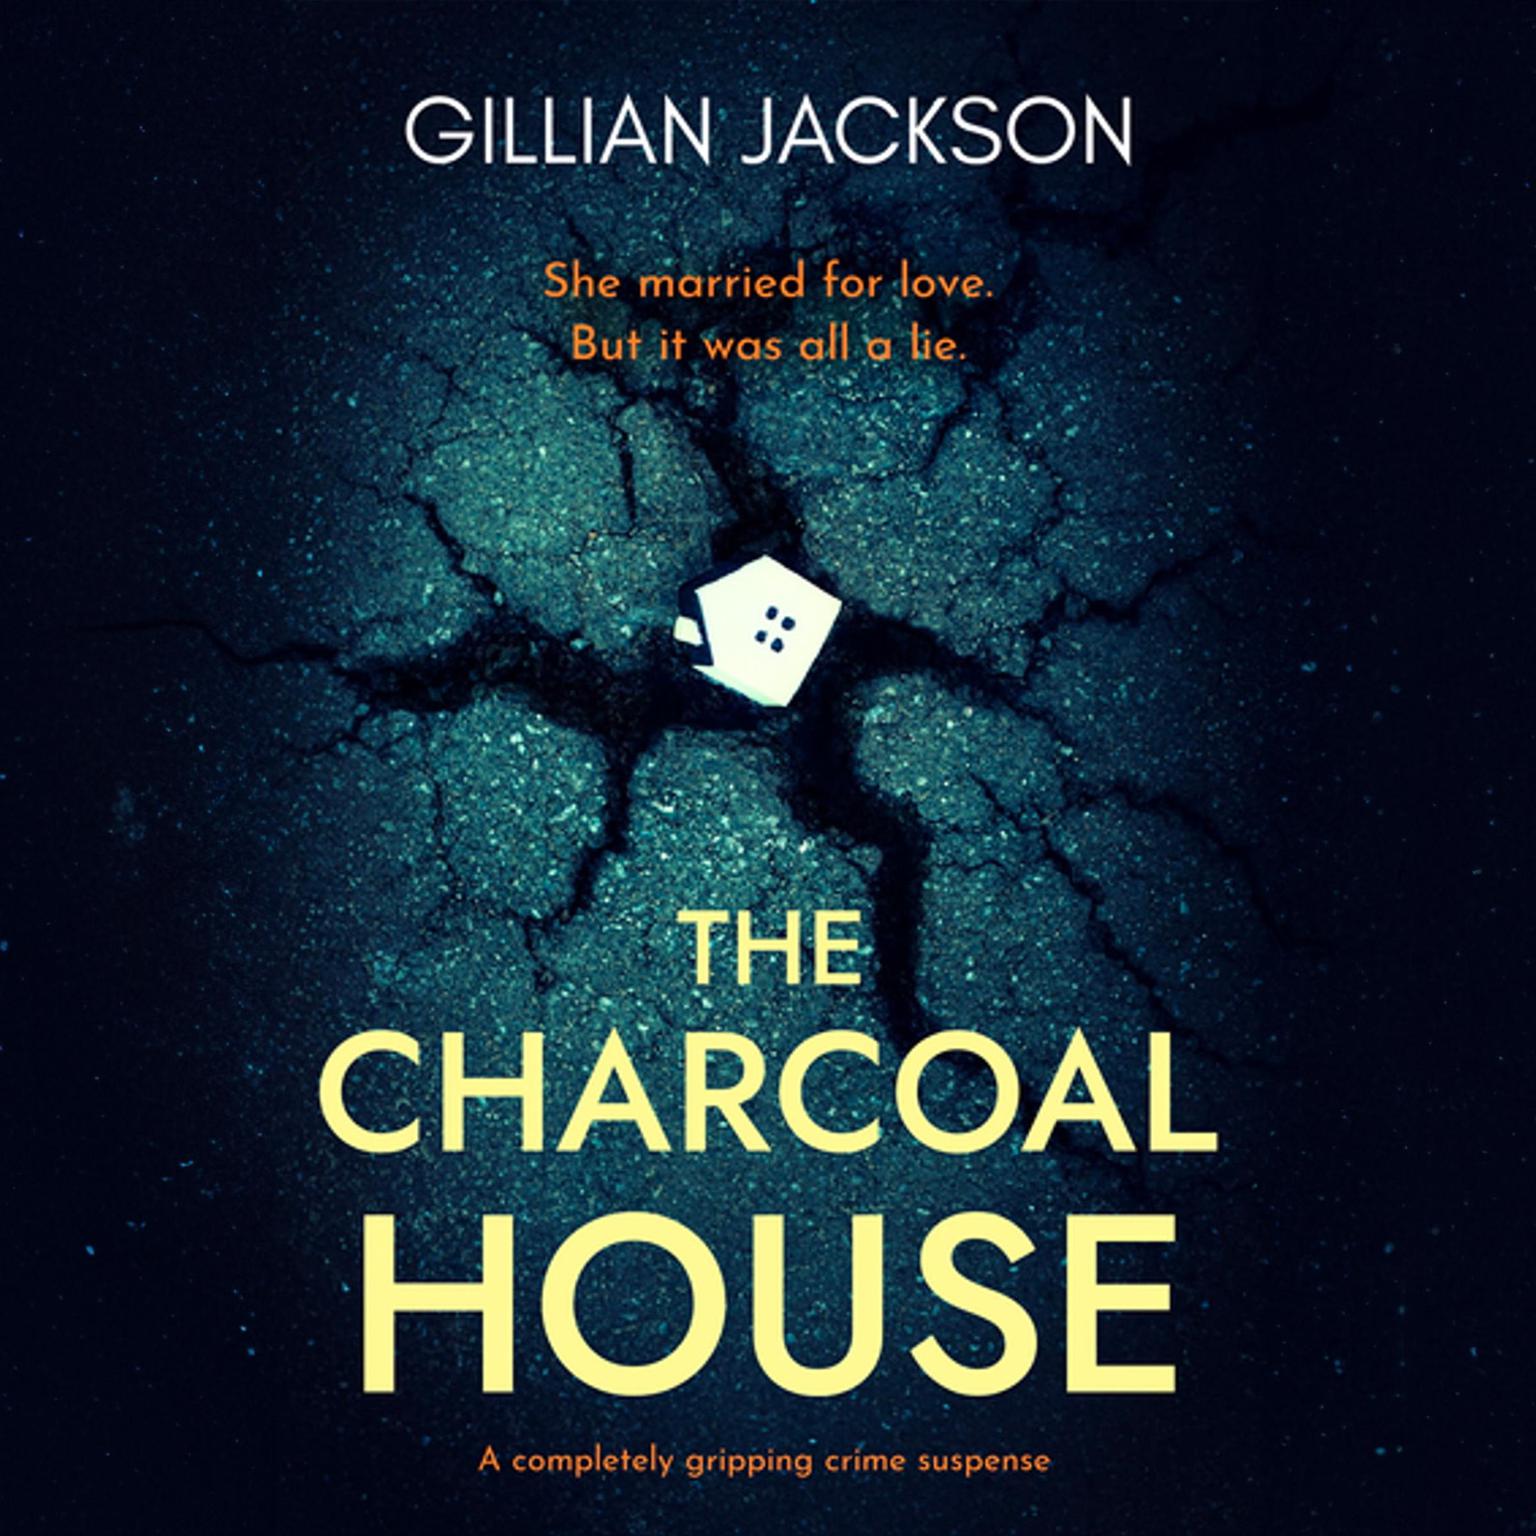 The Charcoal House Audiobook, by Gillian Jackson